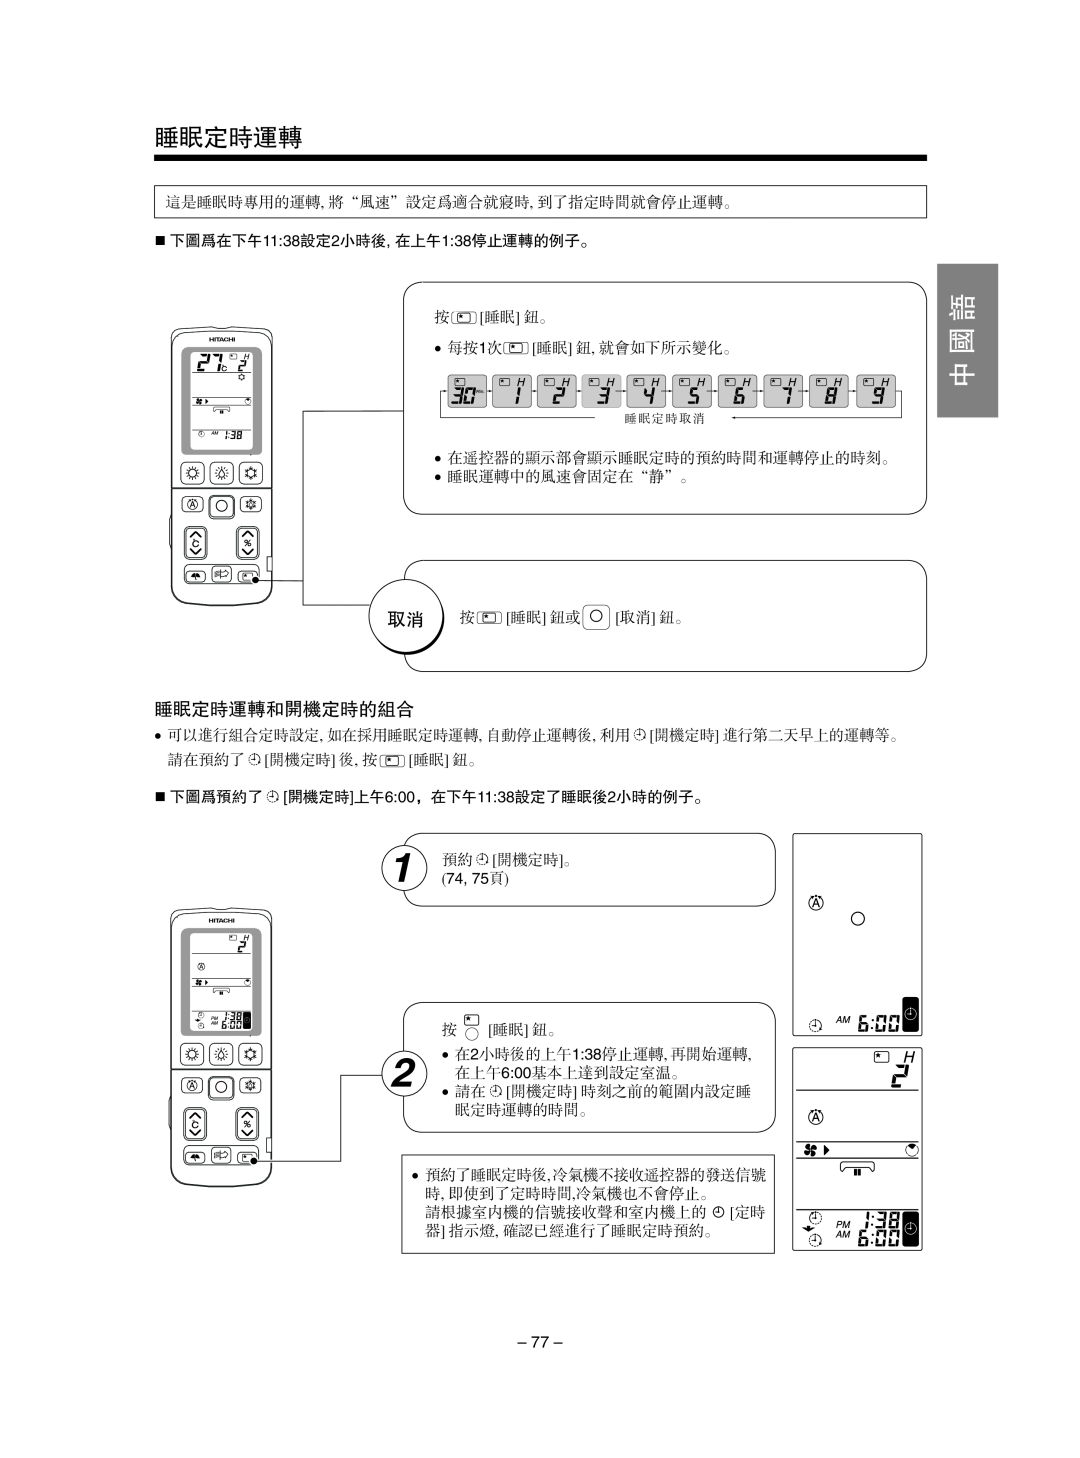 Hitachi RAS-SX10HAK / RAC-SX10HAK instruction manual 睡眠定时运转和开机定时的组合, 中 国 语, 开机定时 进行第二天早上的运转等。, 1 预约 开机定时。 74, 75页 